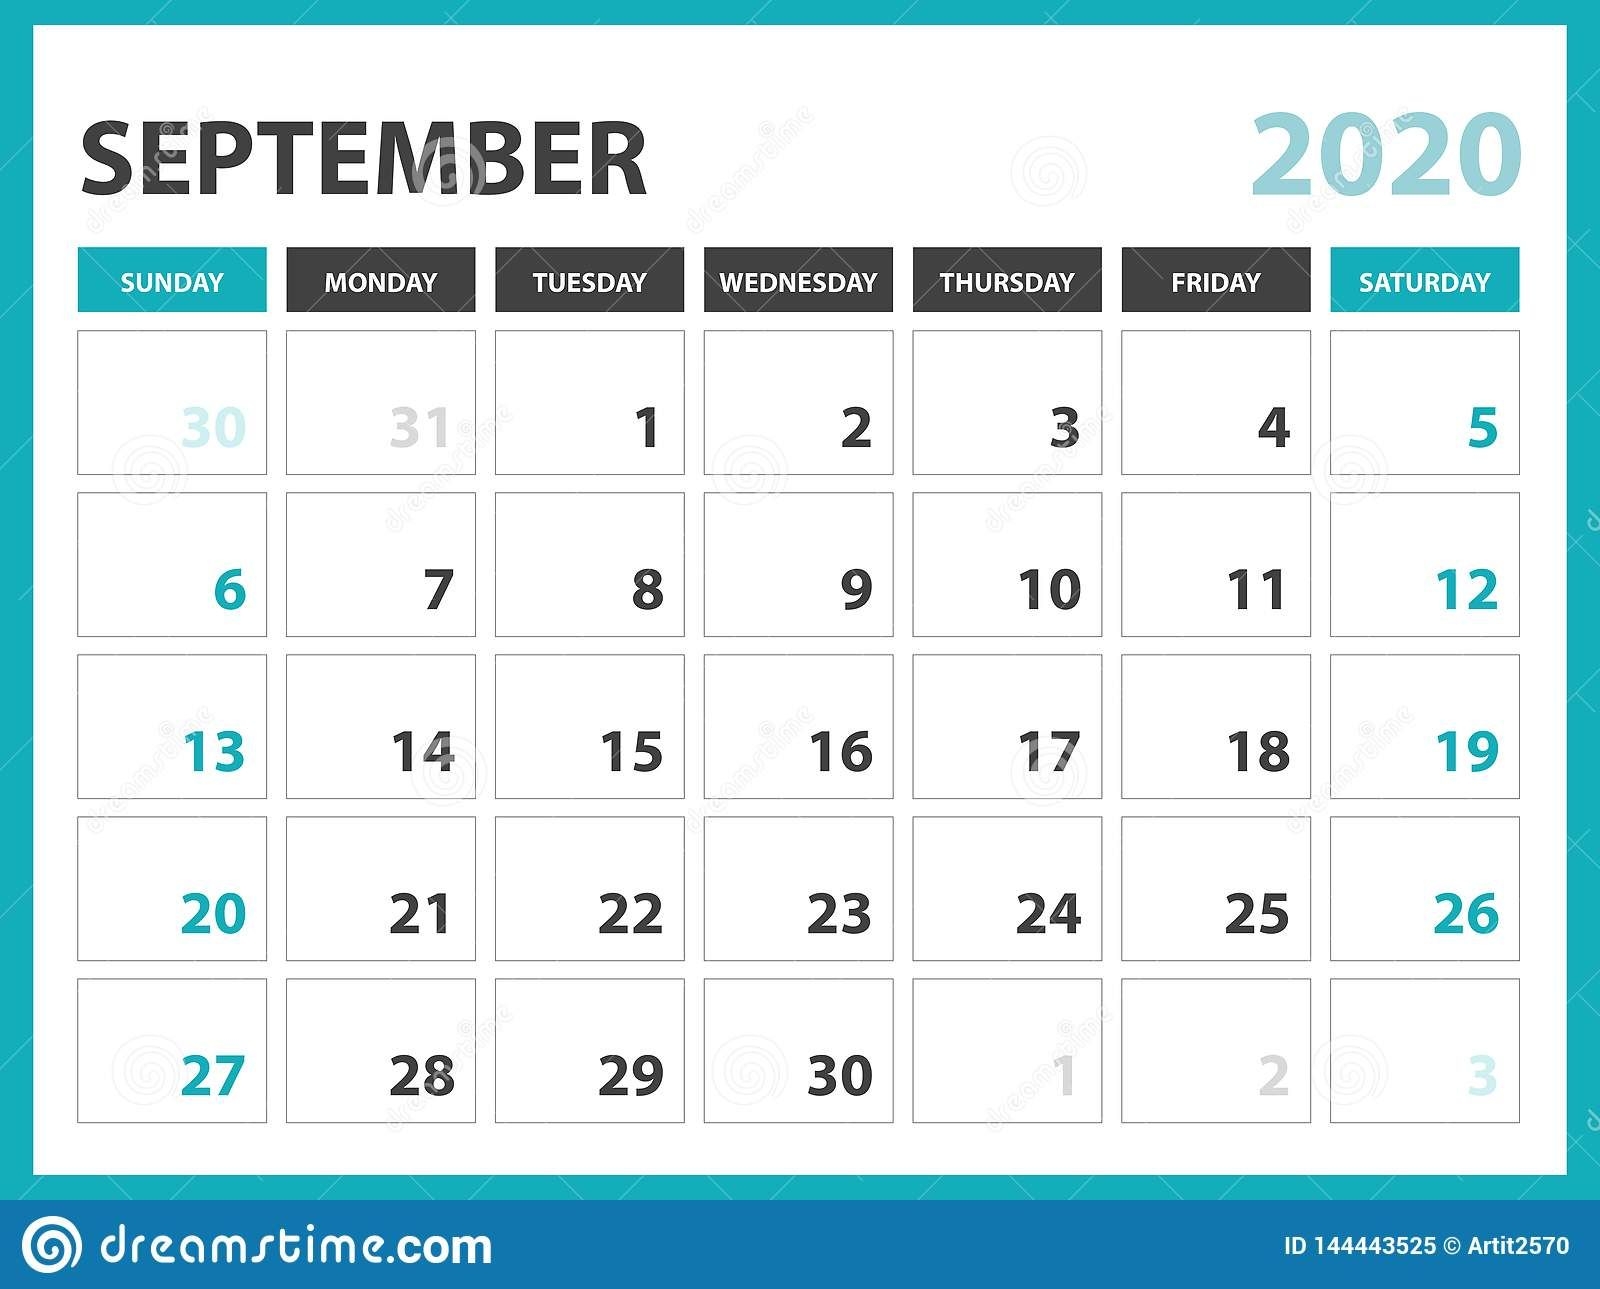 Desk Calendar Layout Size 8 X 6 Inch, September 2020